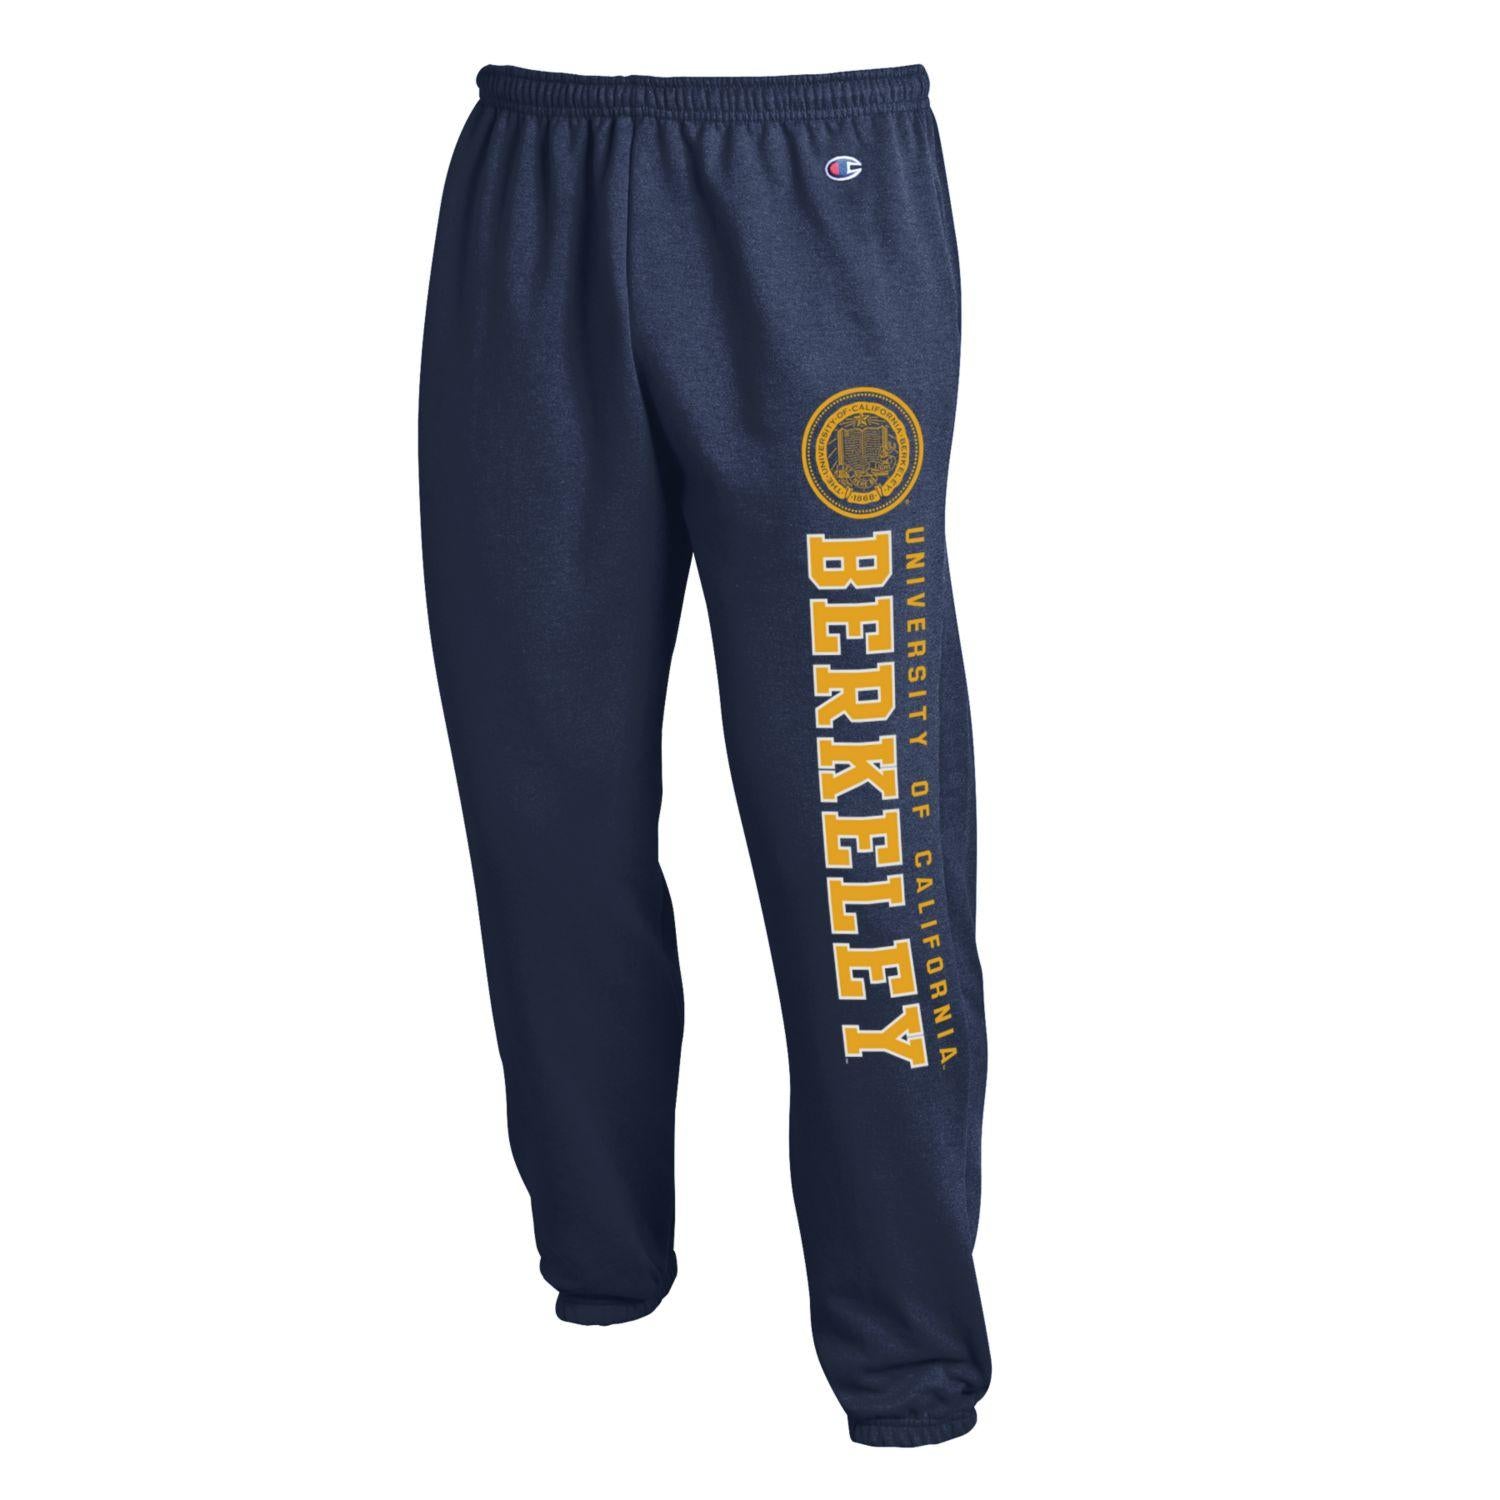 U.C. Berkeley Champion Men's banded bottom pants-Navy